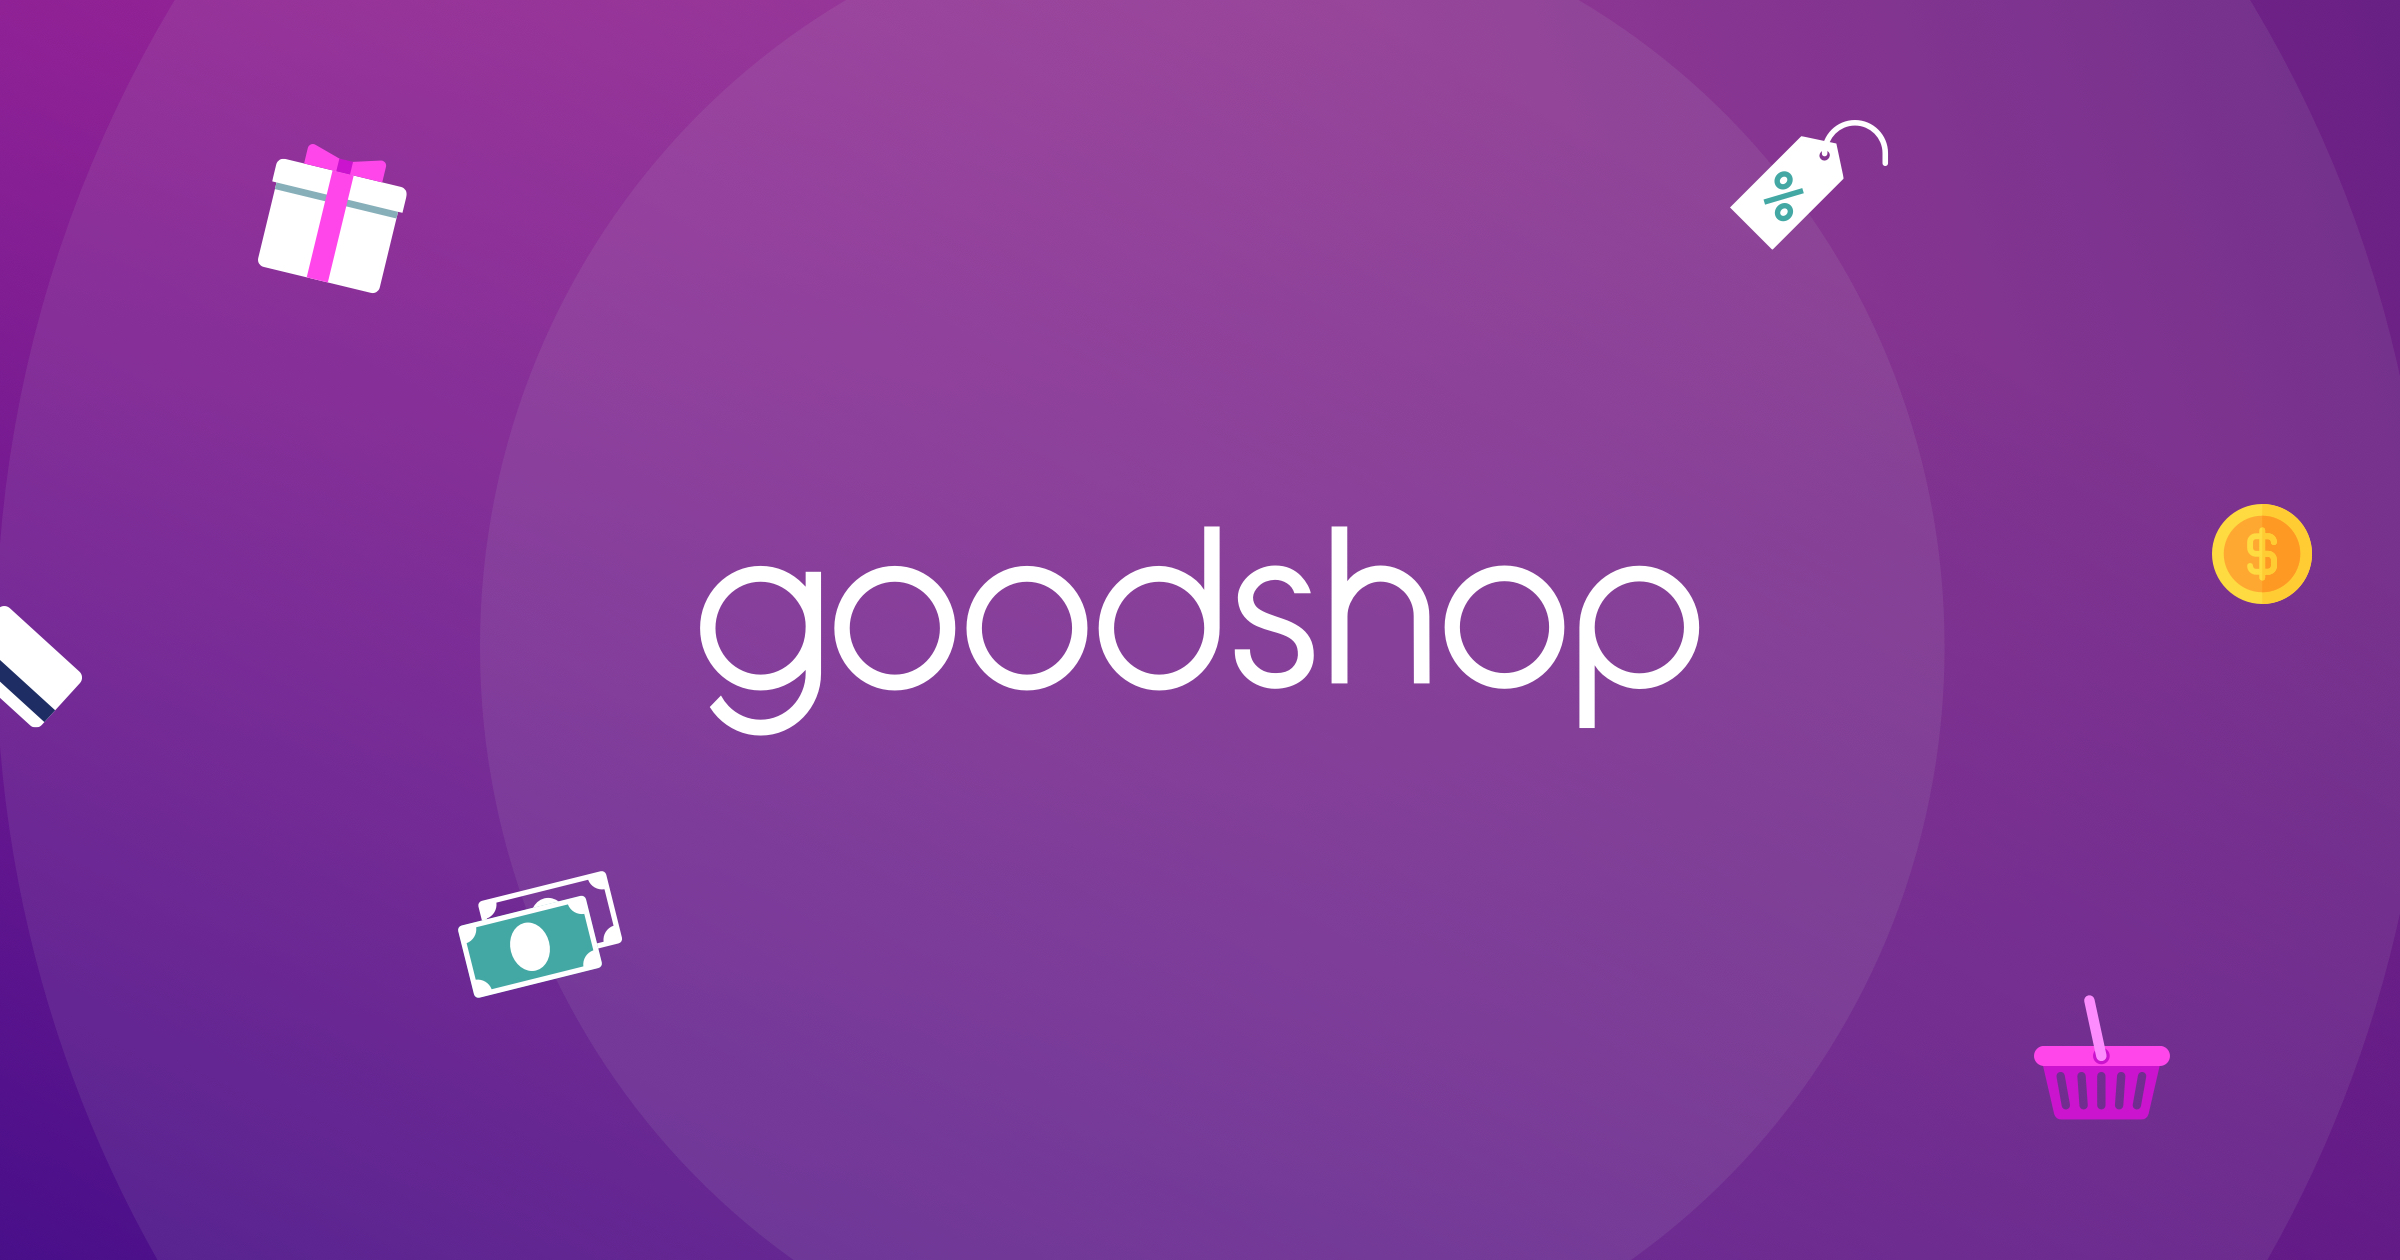 https://www.goodshop.com/assets/social/goodshop_new.jpg